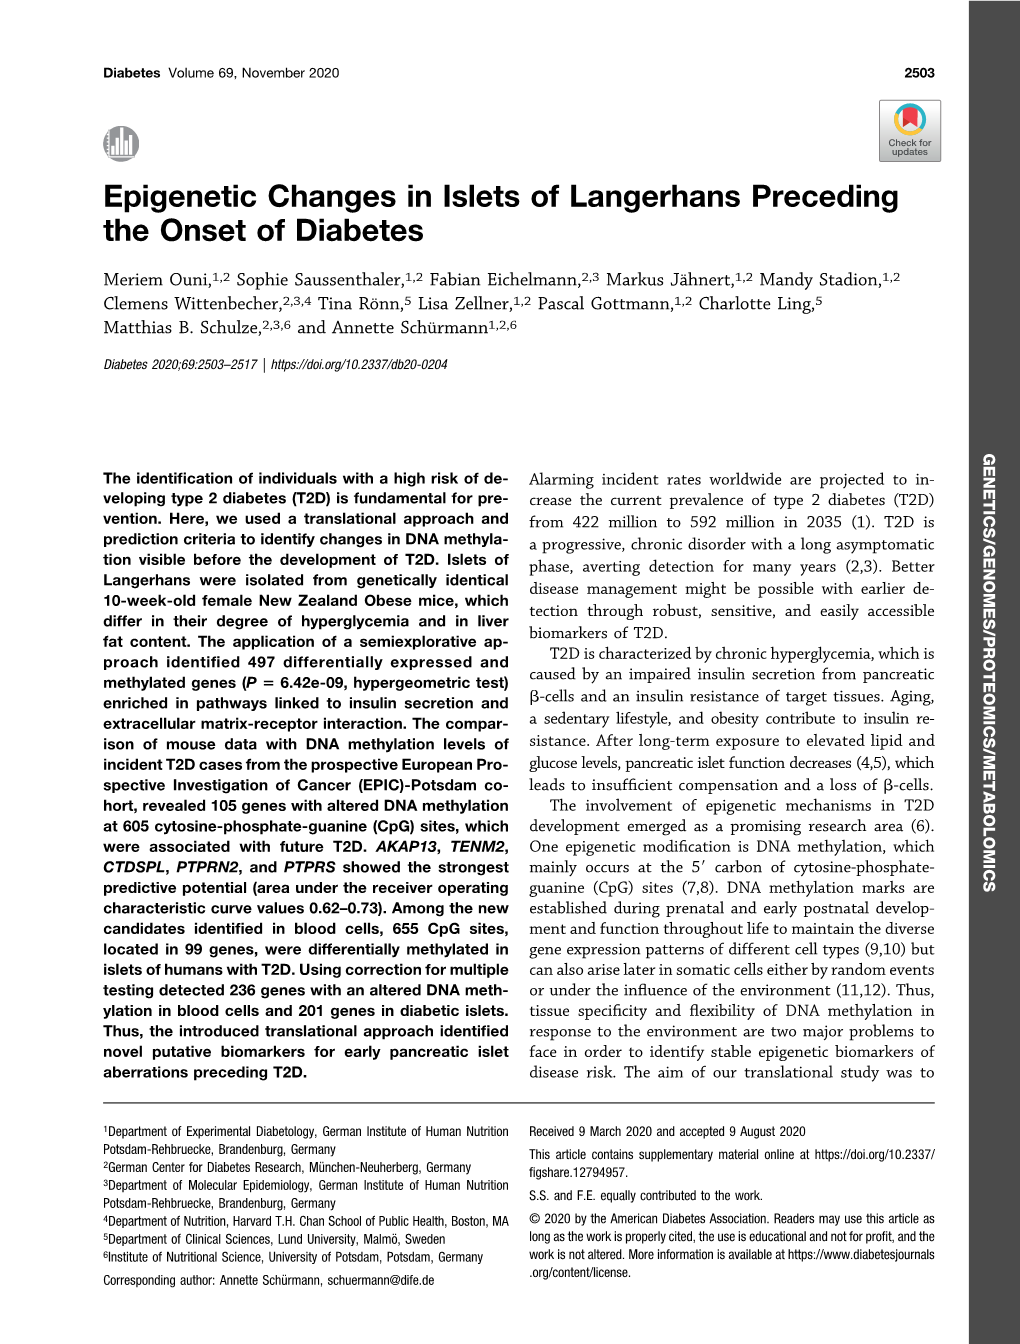 Epigenetic Changes in Islets of Langerhans Preceding the Onset of Diabetes